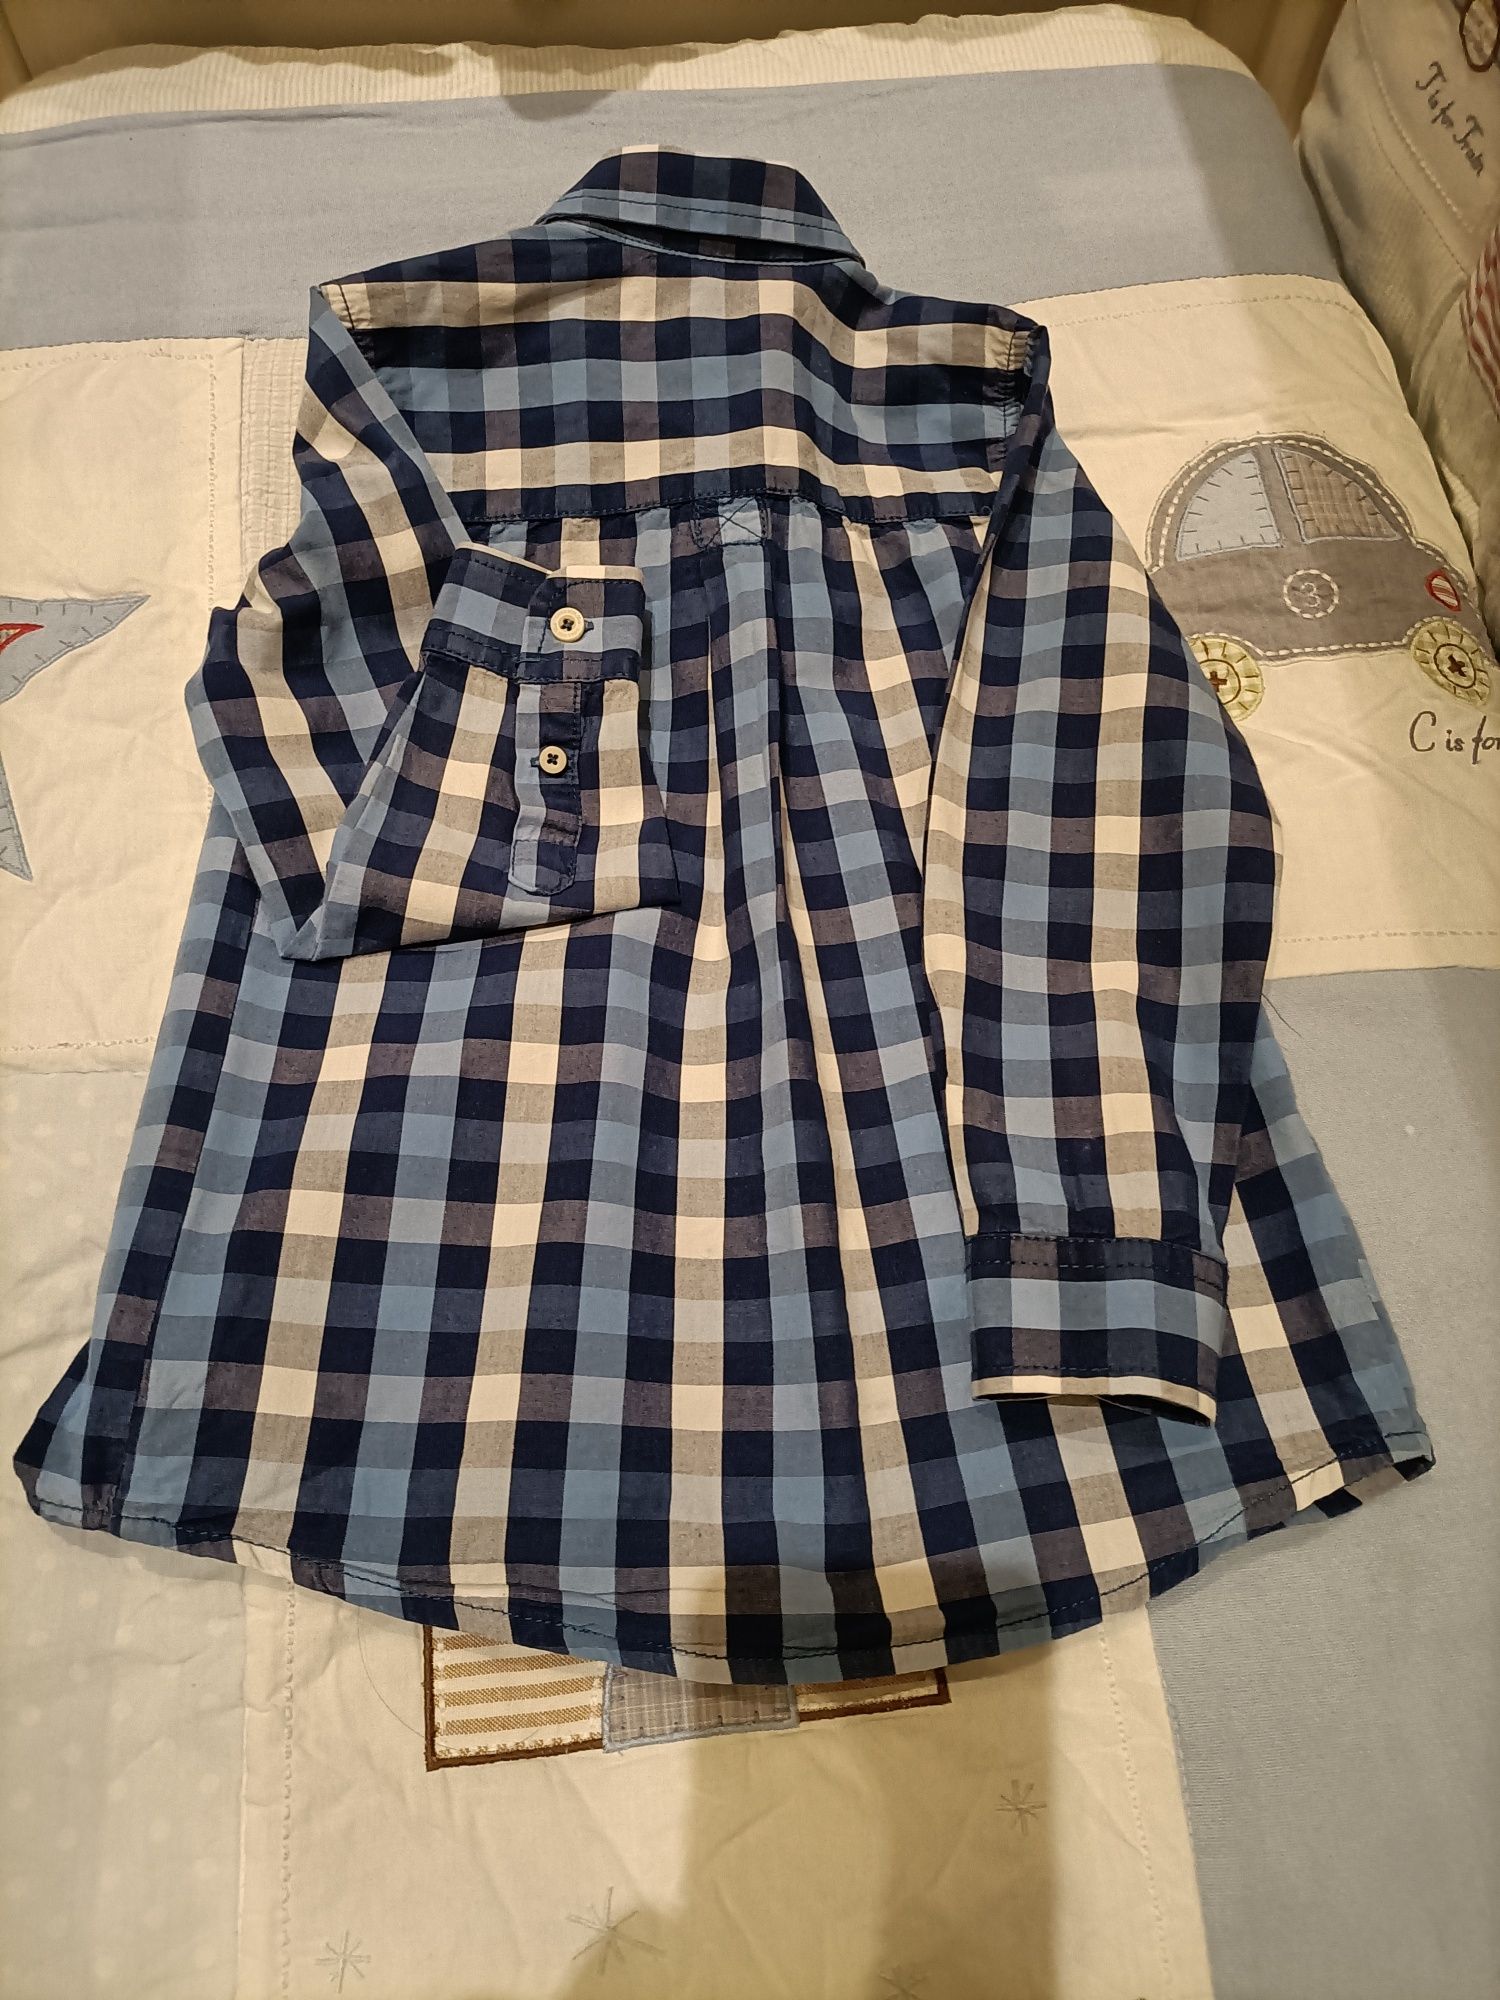 Camisa menino 5-6 anos da Sfera/el corte inglês em xadrez azul